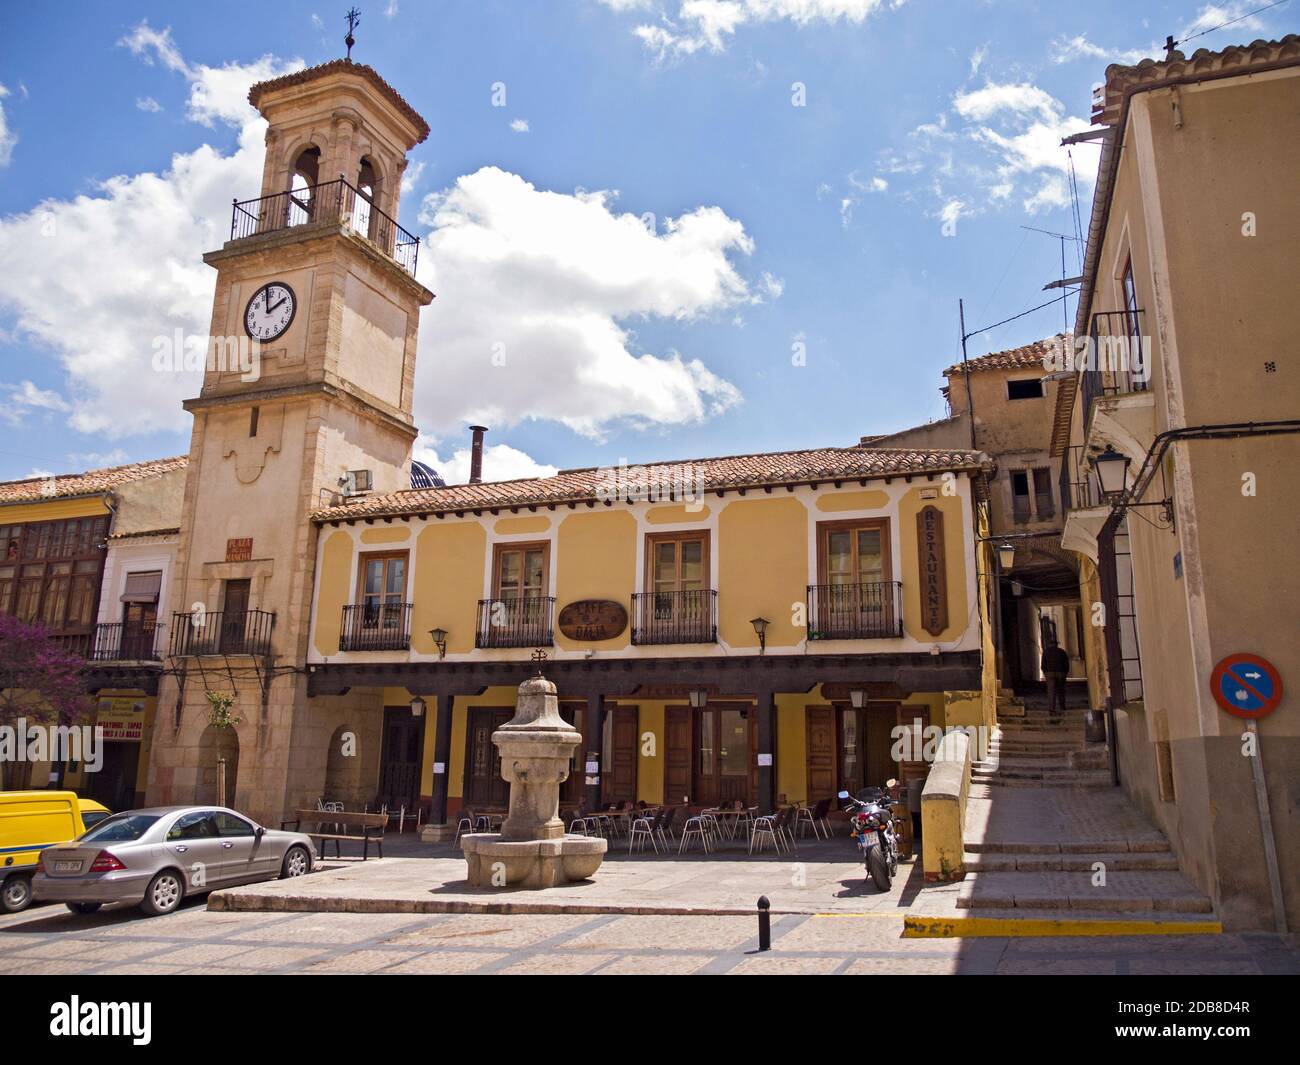 Torre del reloj. Chinchilla de Montearagón. Albacete. Castilla la Mancha. España. Stock Photo